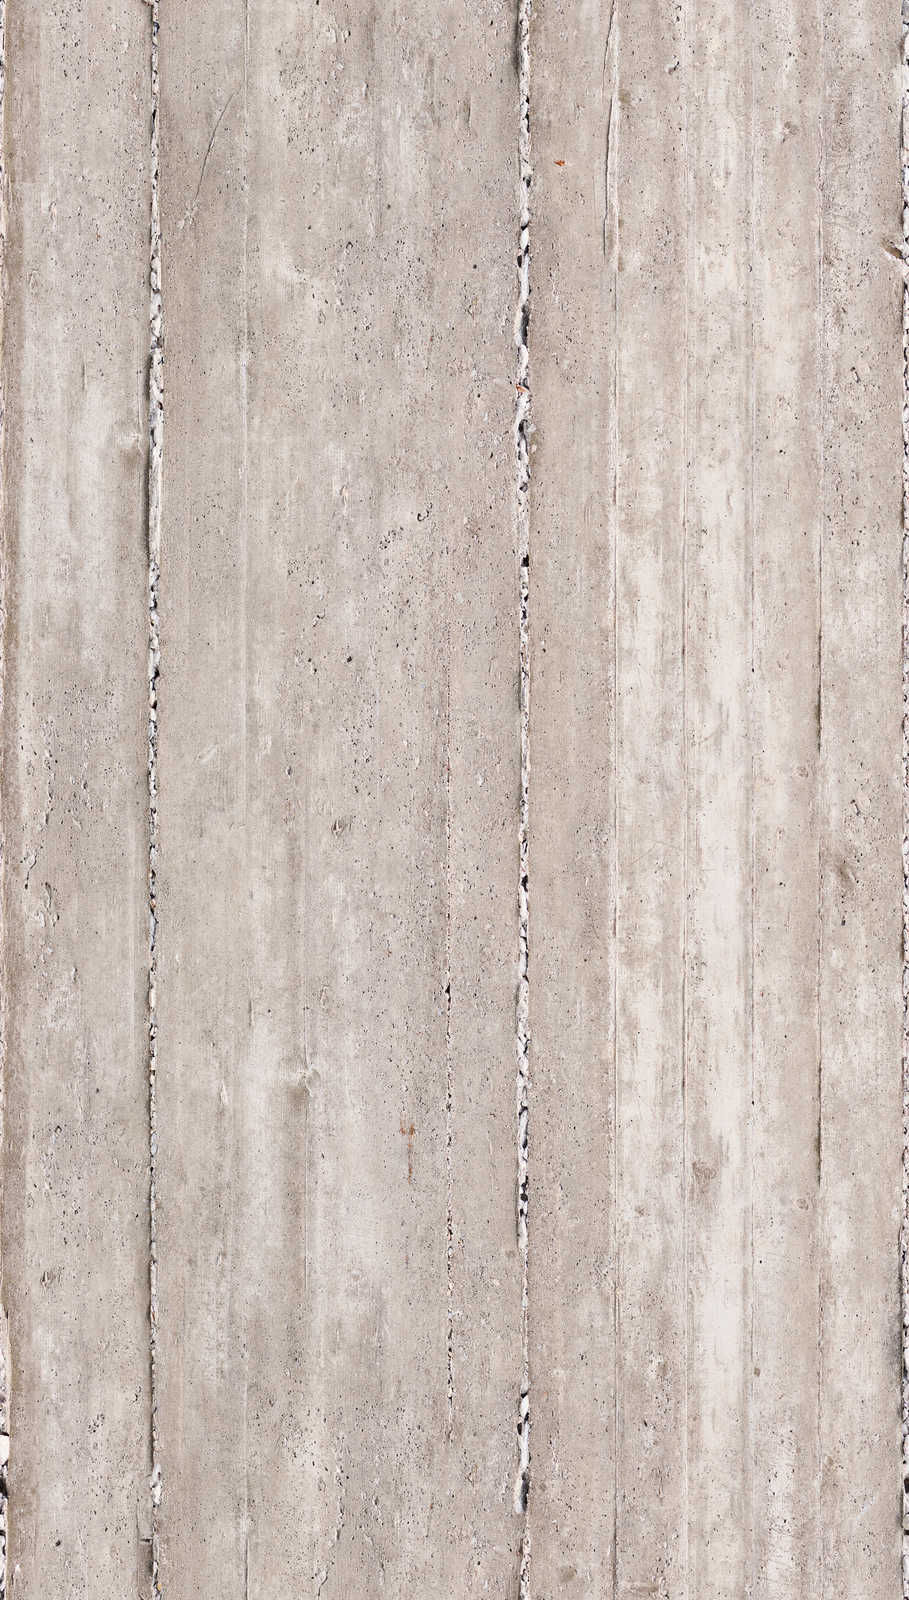             Concrete look non-woven wallpaper in warm tones - grey, cream
        